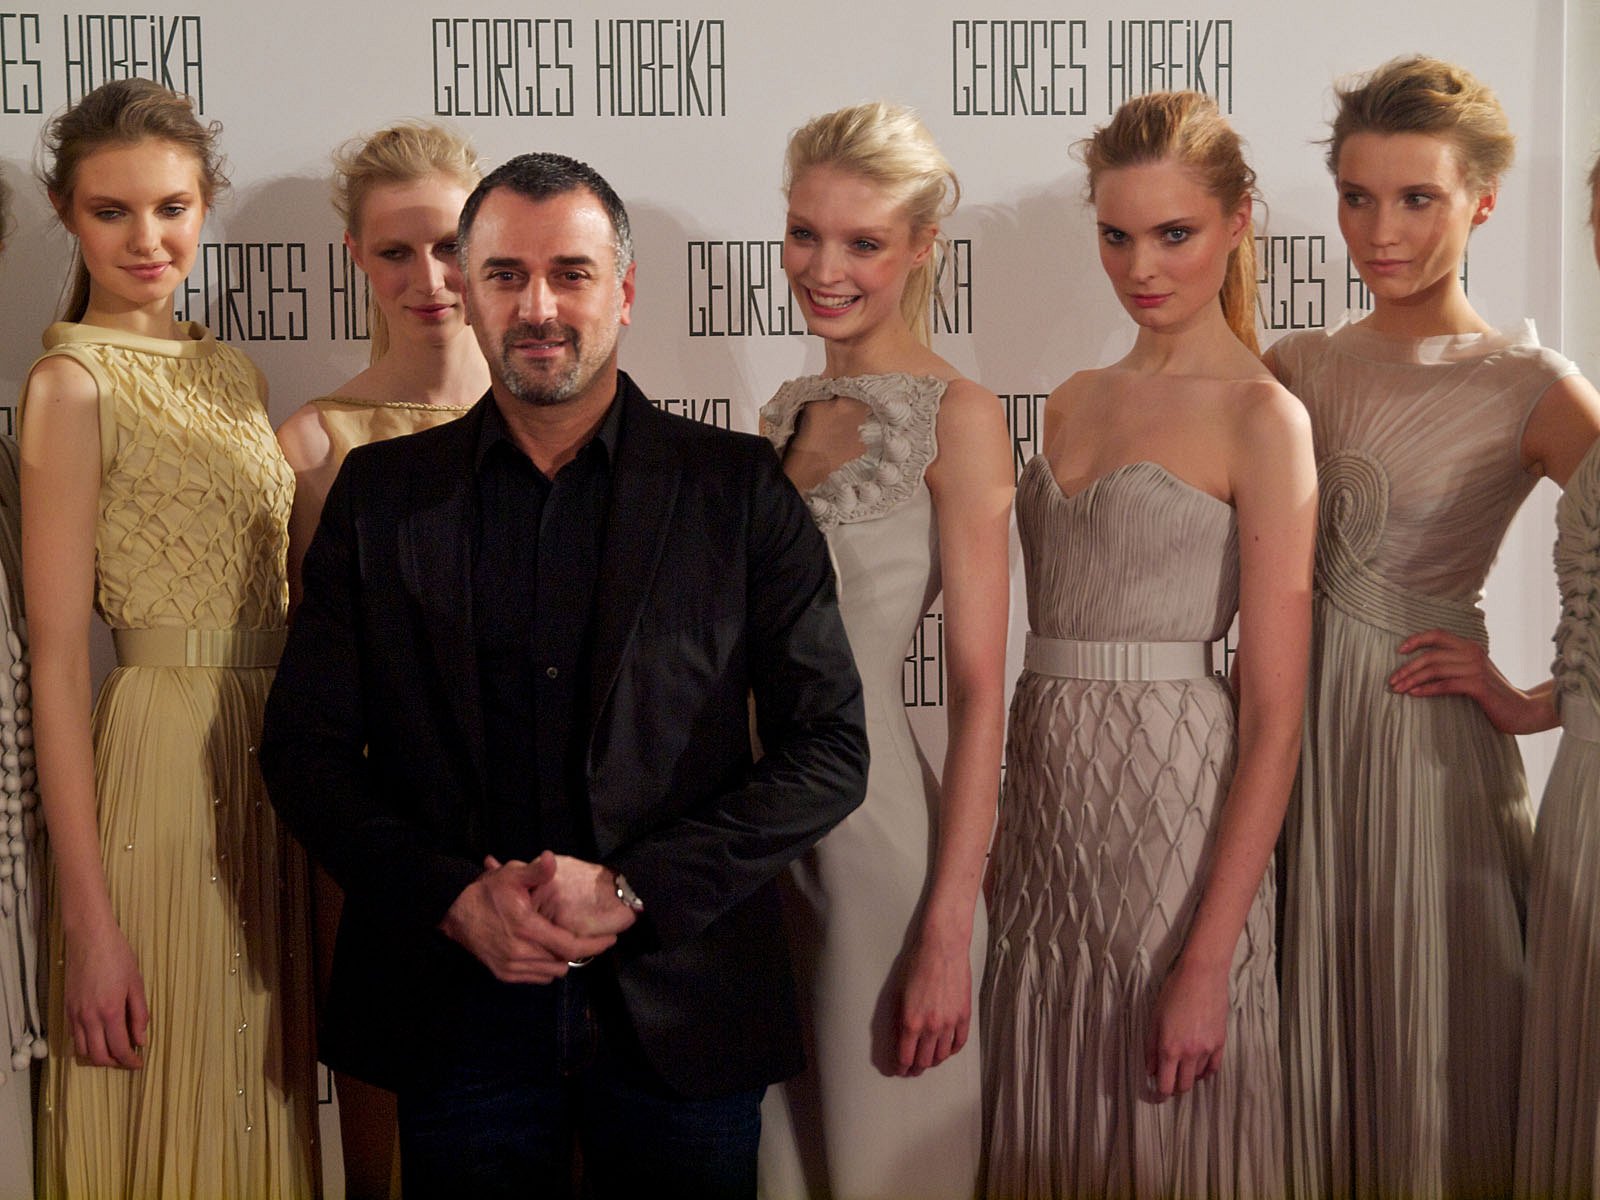 George Hobeika Backstage, F/S 2011 - Couture - 1